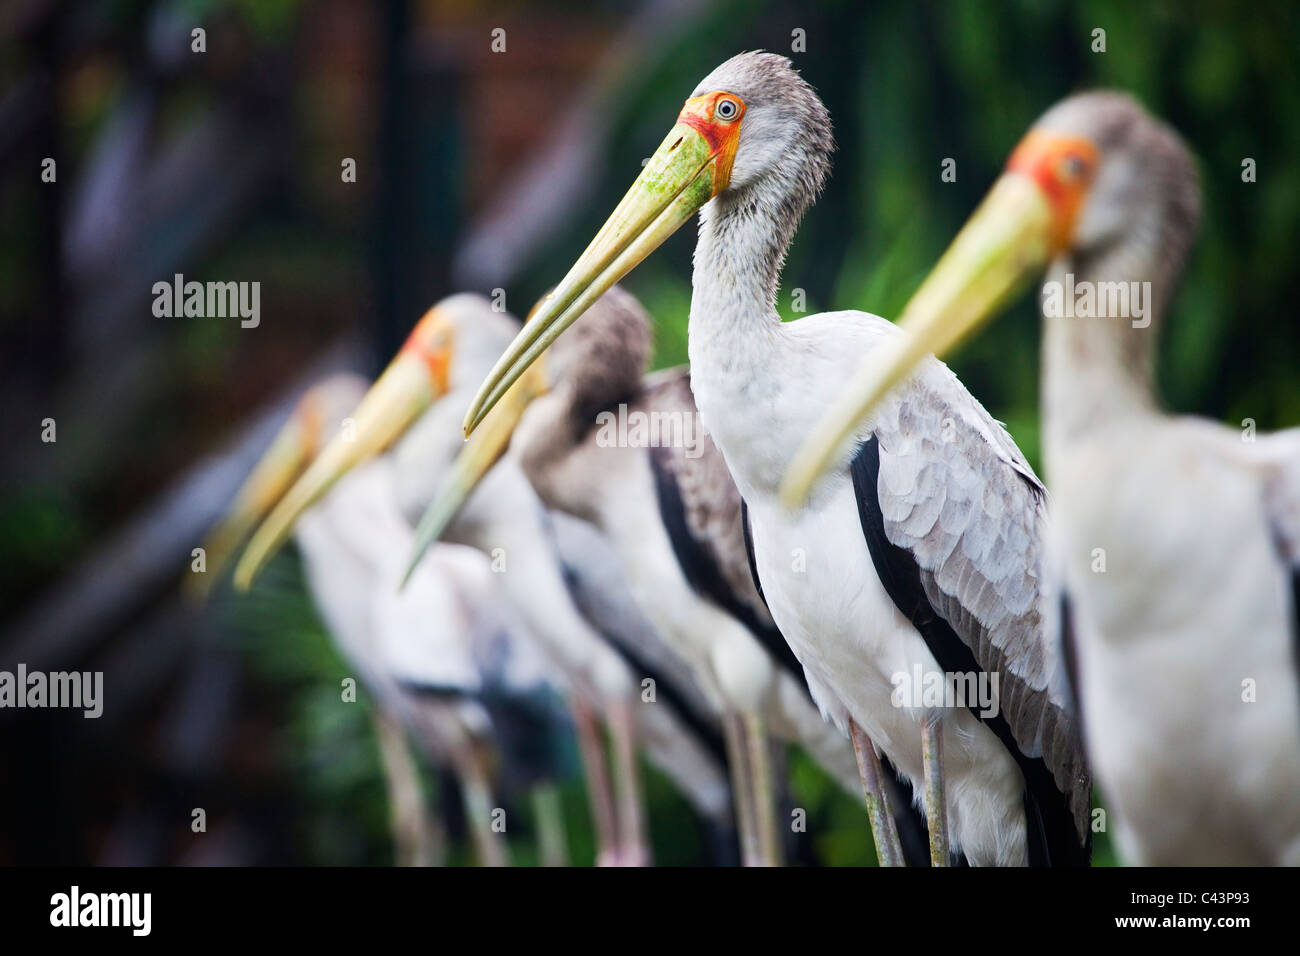 A Bunch of Yellow-Billed Stork ( Mycteria ibis ) Stock Photo